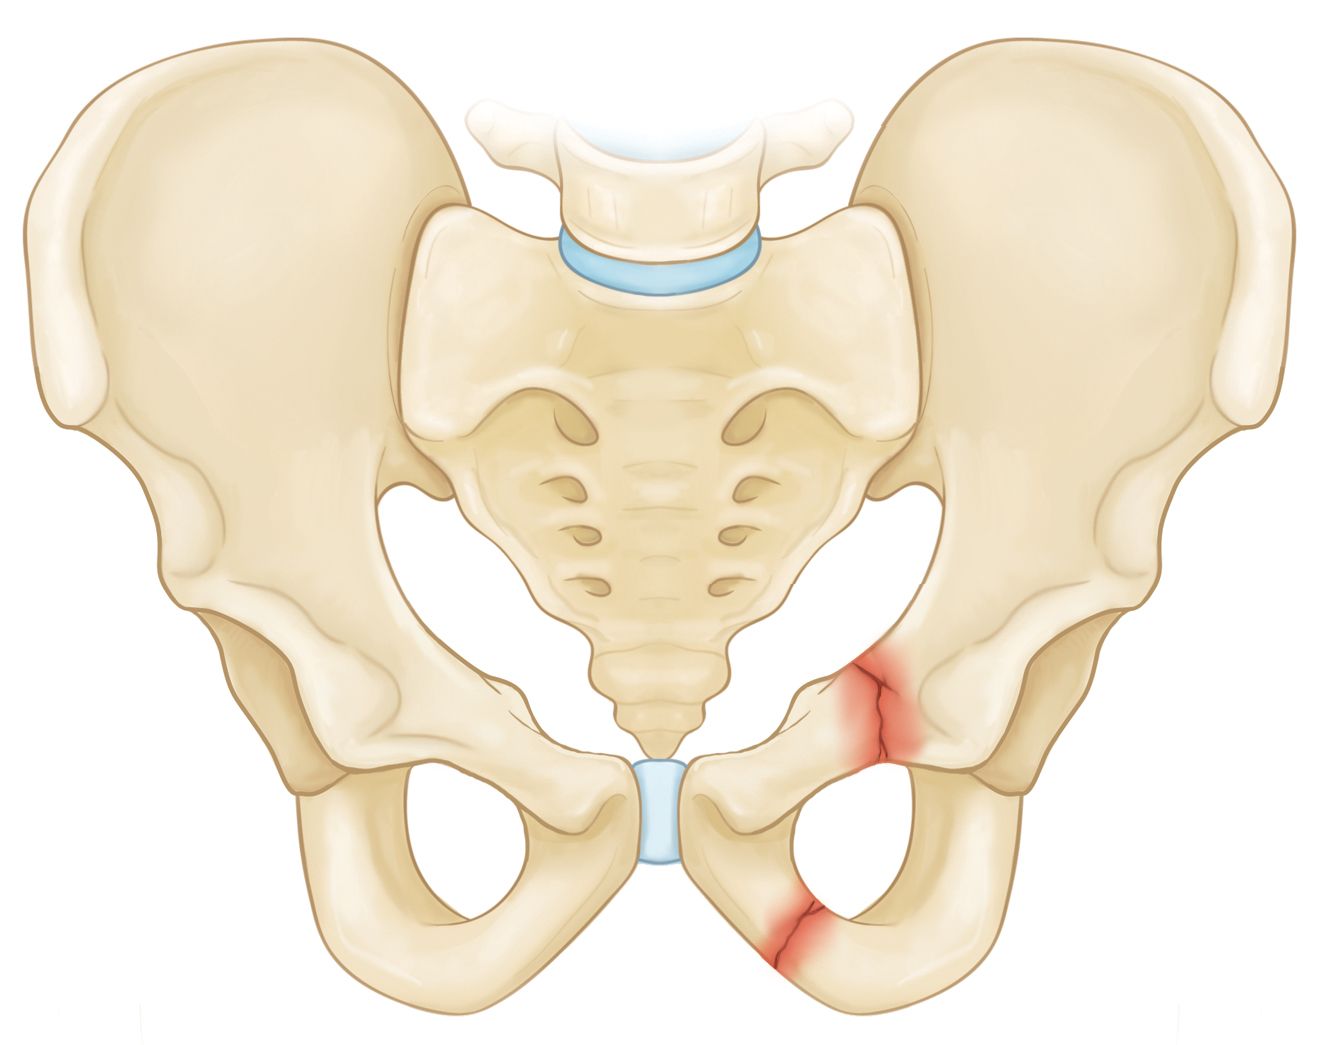 sacral fractures